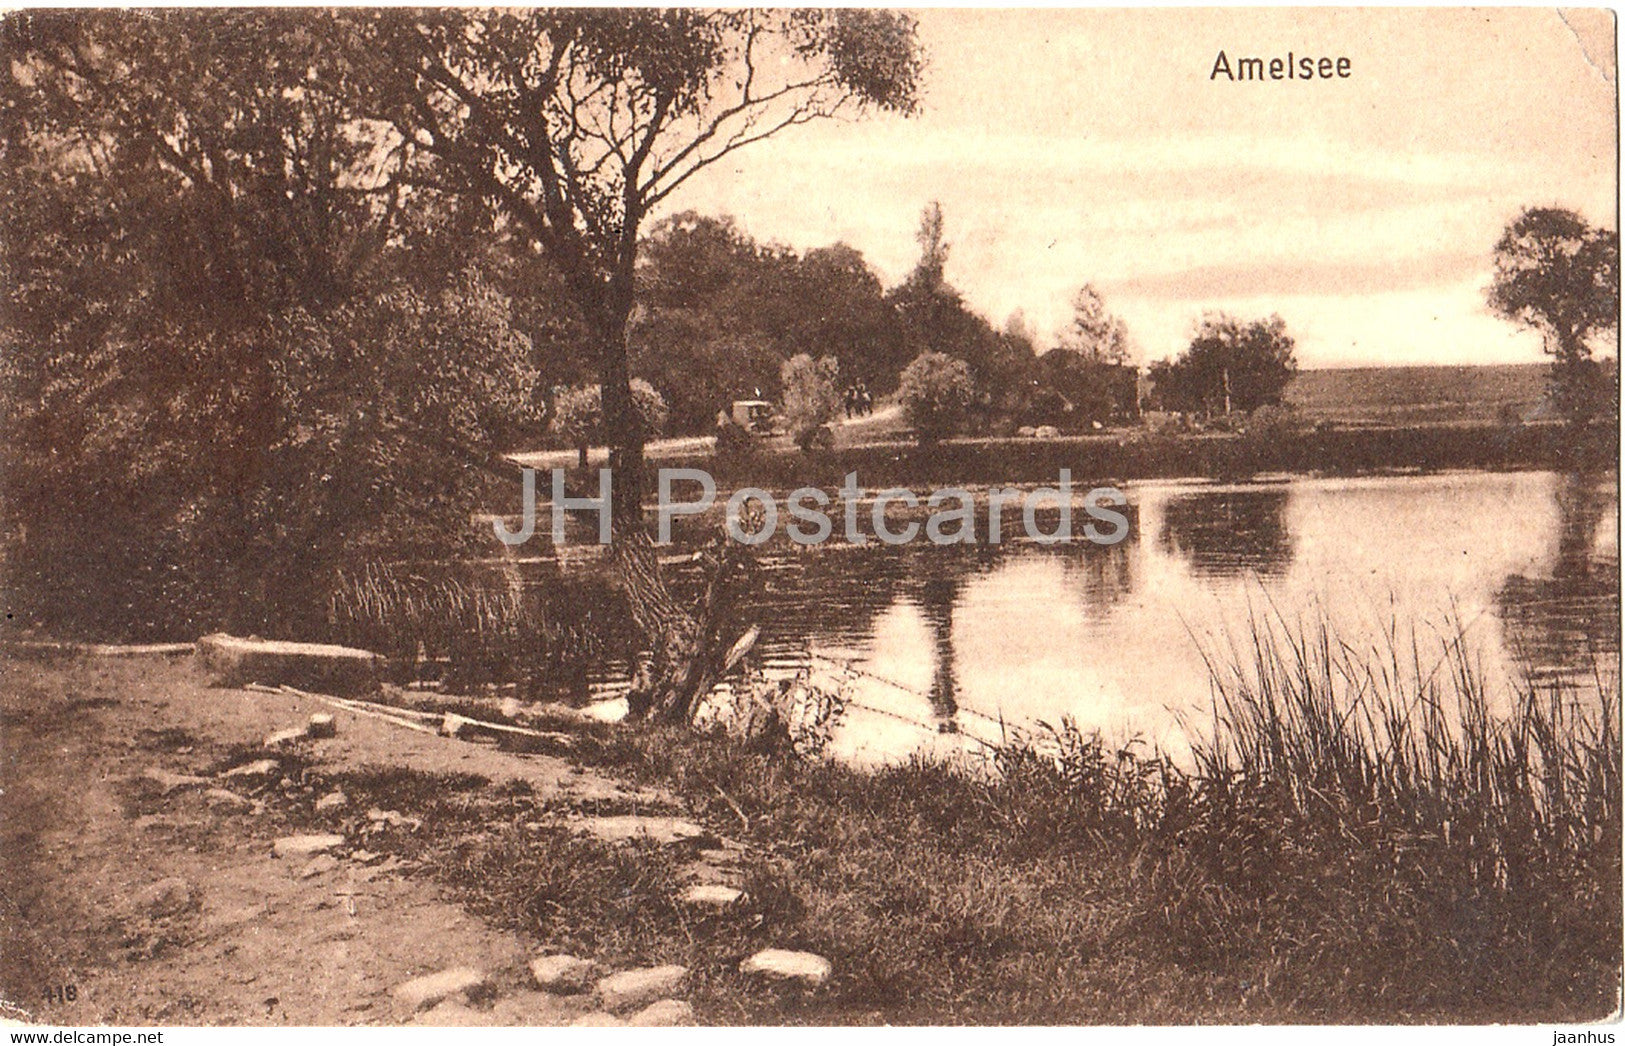 Amelsee - Feldpost - old postcard - 1916 - France - used - JH Postcards